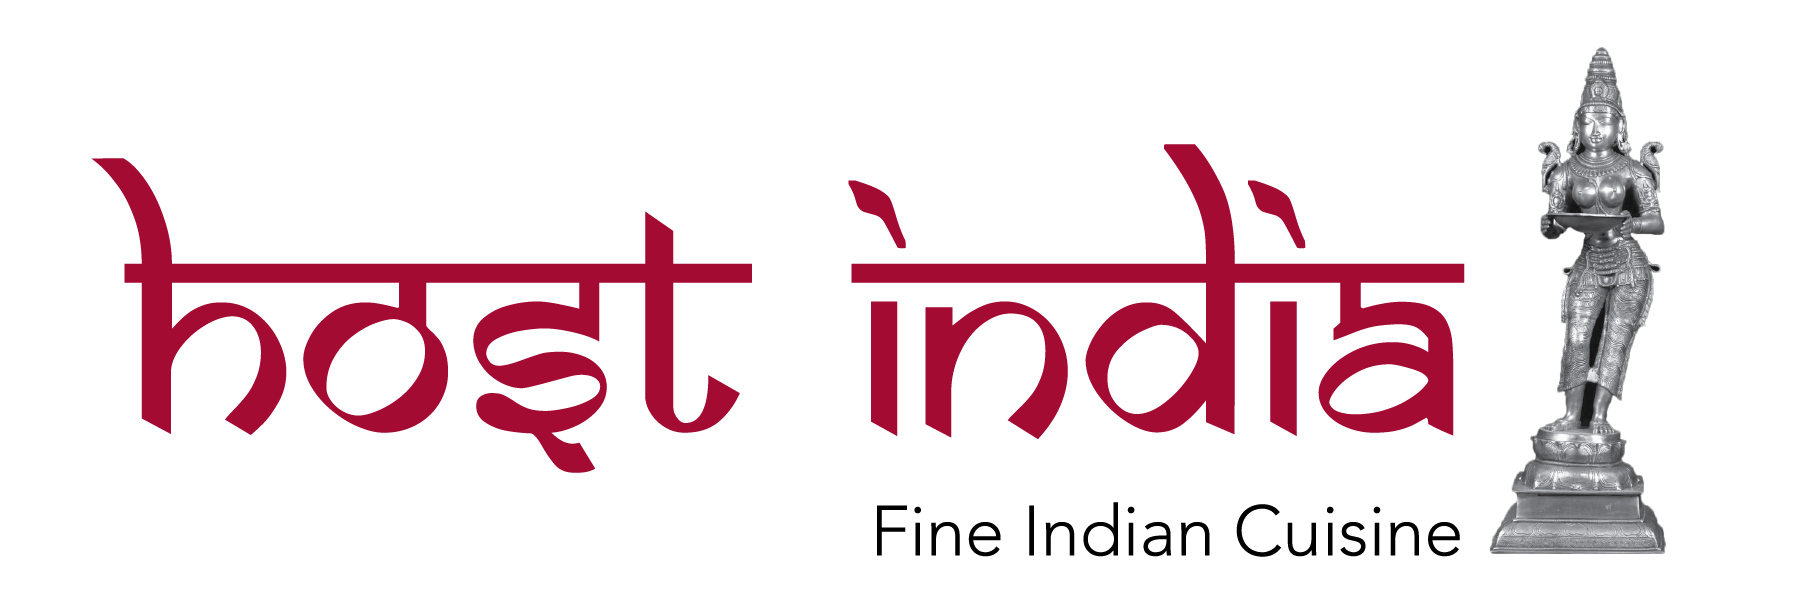 Host India – Ottawa East